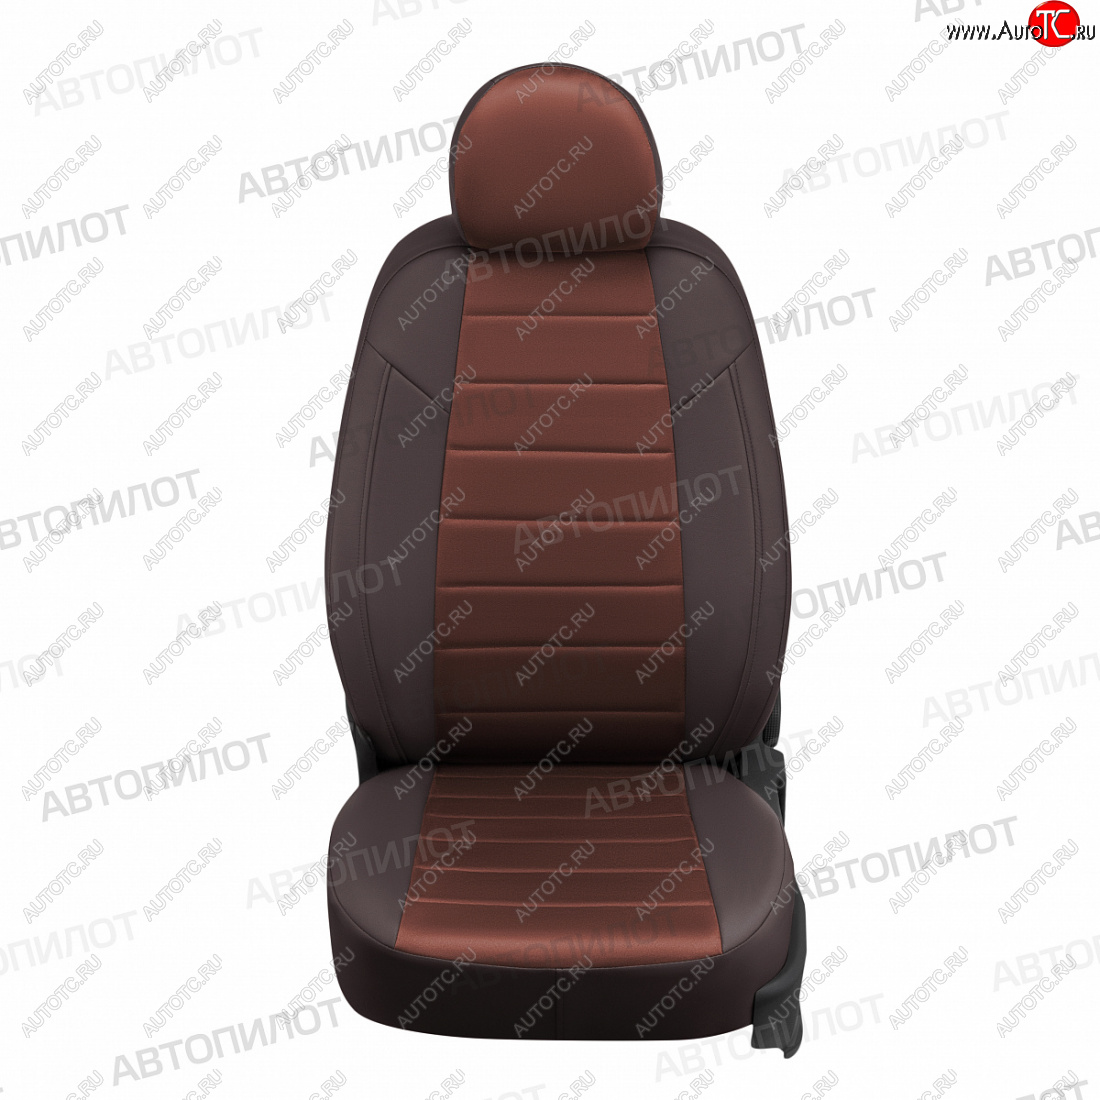 13 449 р. Чехлы сидений (экокожа/алькантара) Автопилот  Honda CR-V  RE1,RE2,RE3,RE4,RE5,RE7 (2007-2012) (шоколад)